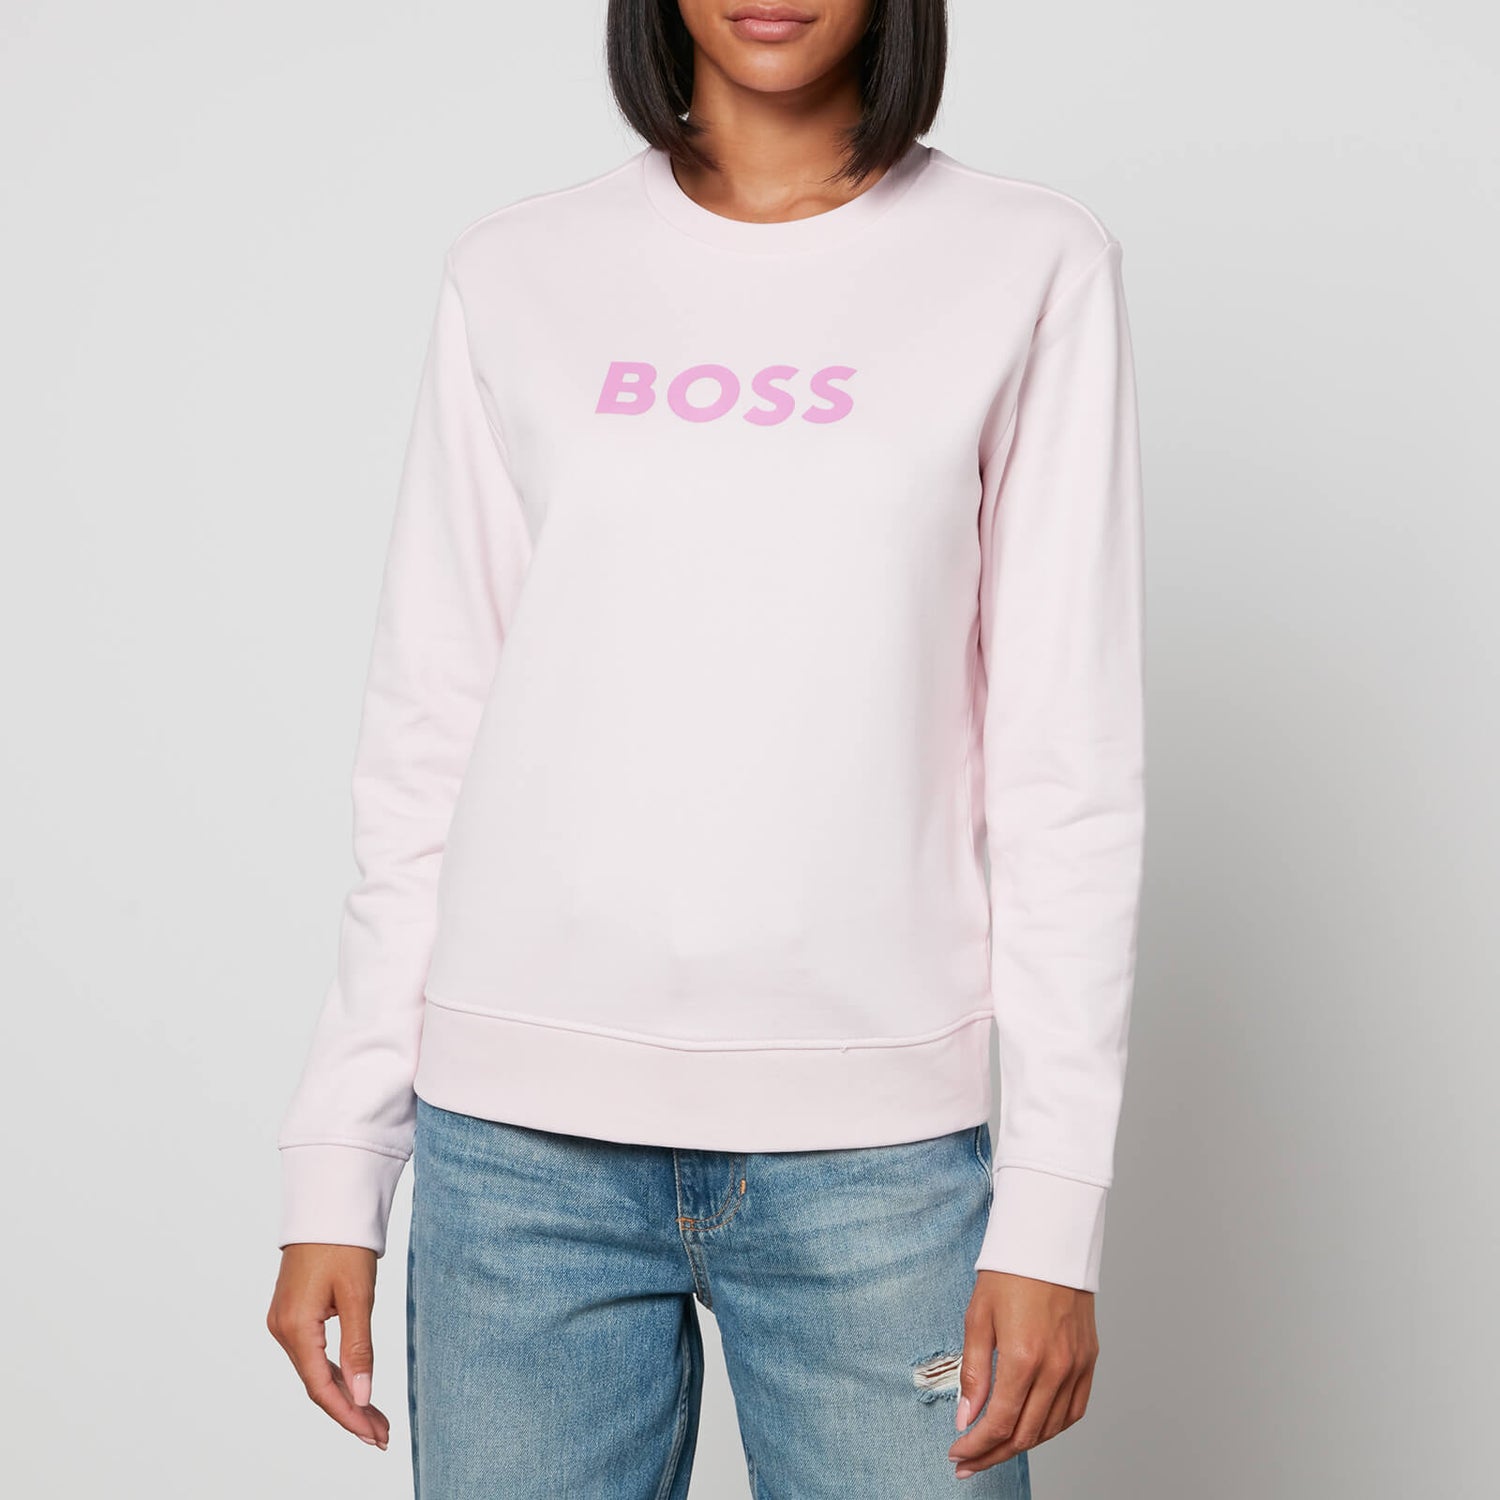 BOSS Women's Elaboss Sweatshirt - Light/Pastel Pink - XS